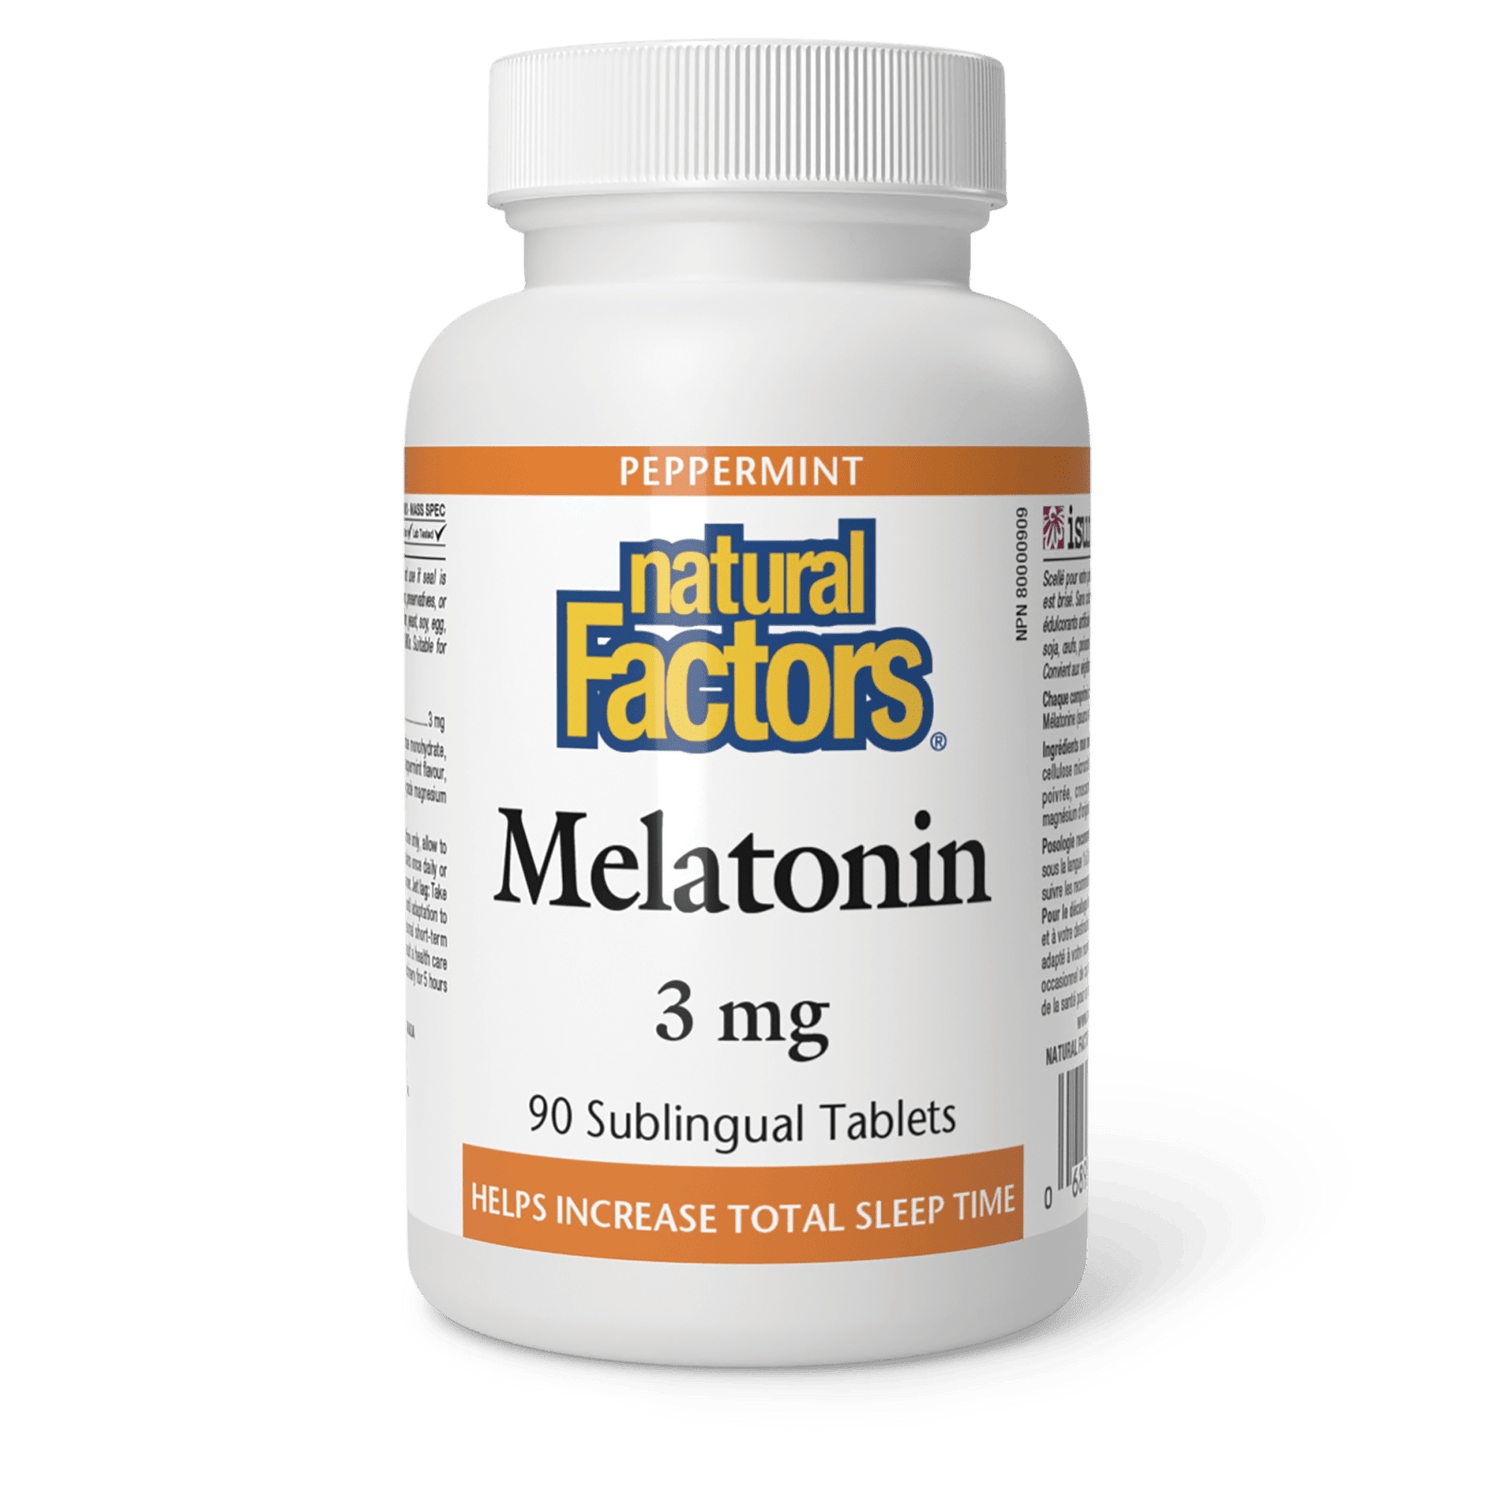 Melatonin 3 mg, Peppermint, Natural Factors|v|image|2715